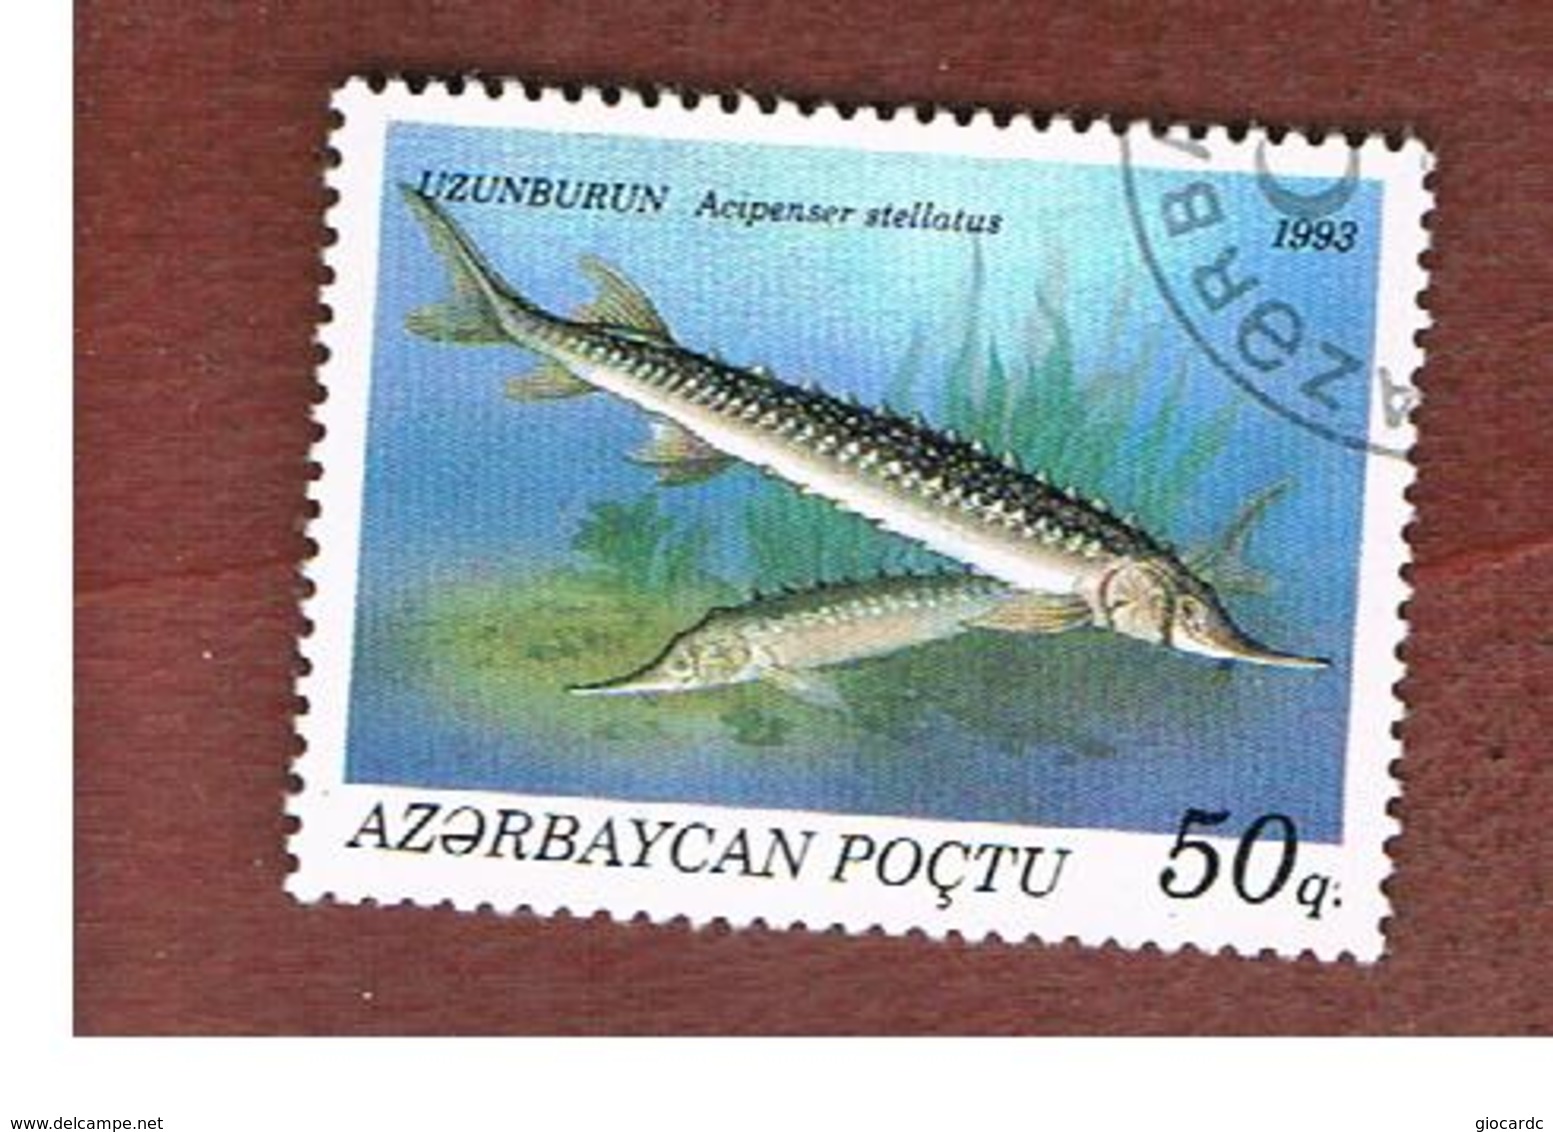 AZERBAIJAN   - SG 113 -  1993 FISHES: STELLATE STURGEON  -   USED - Azerbaijan